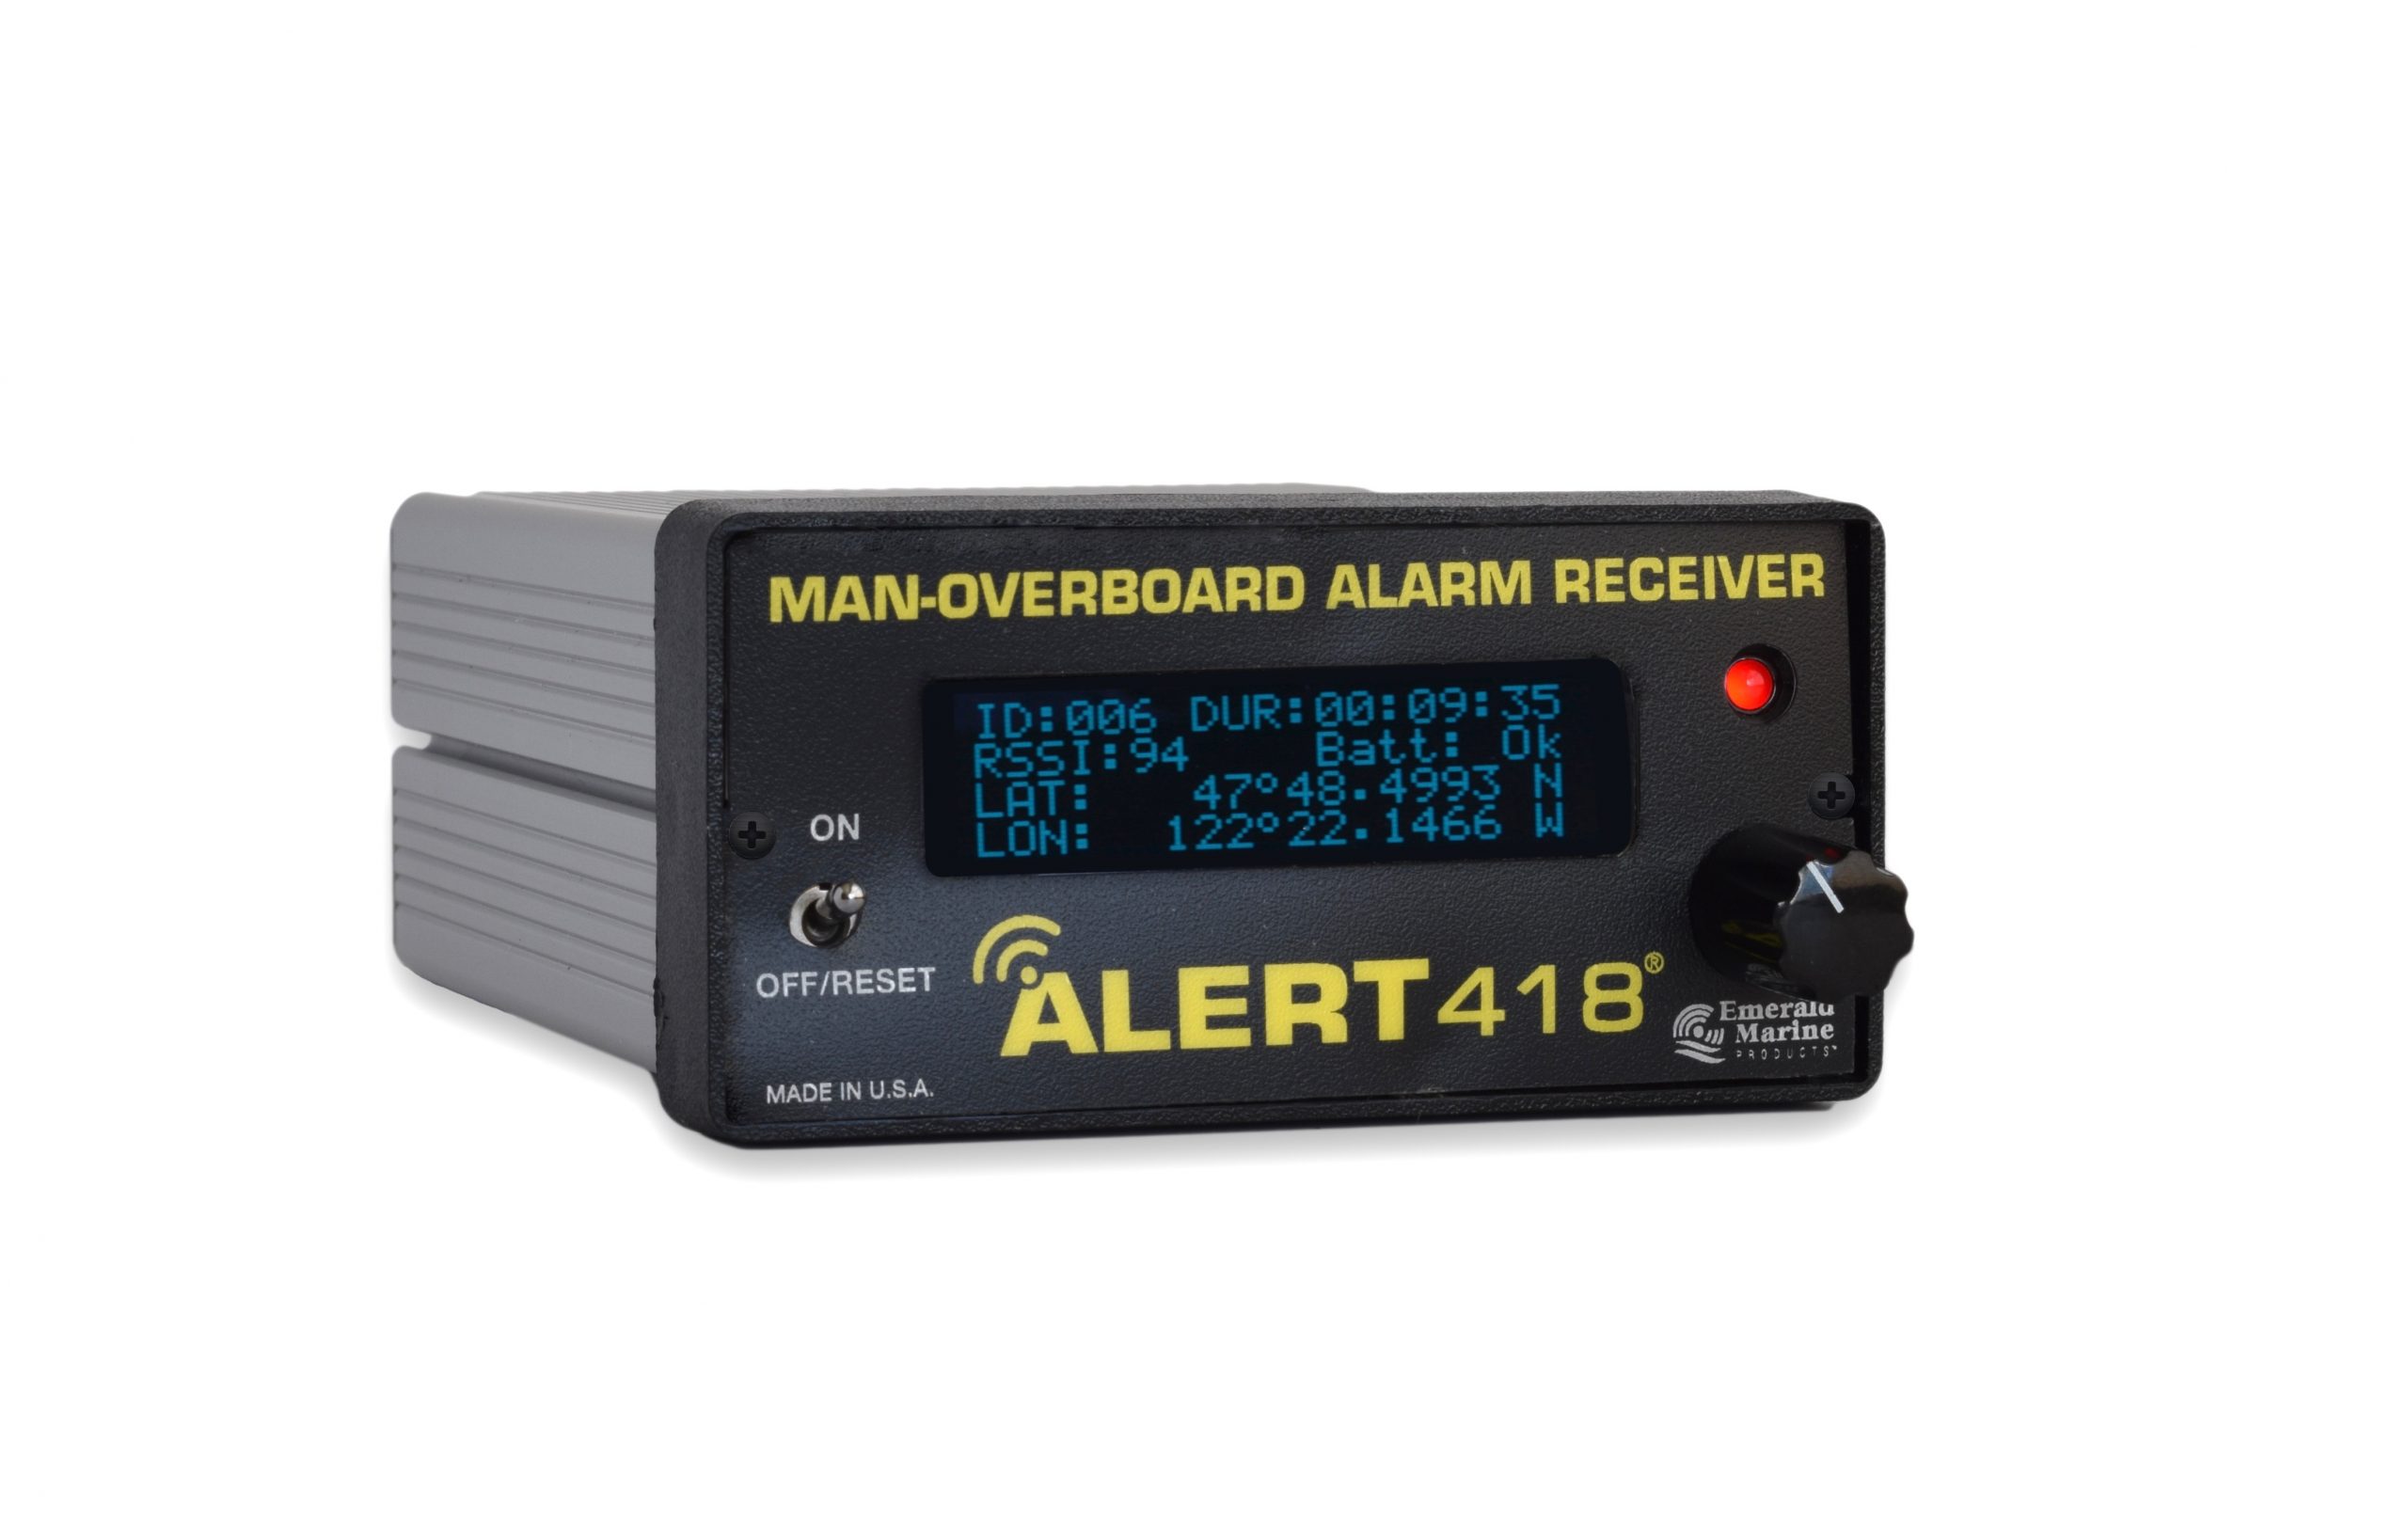 Man-Overboard alarm